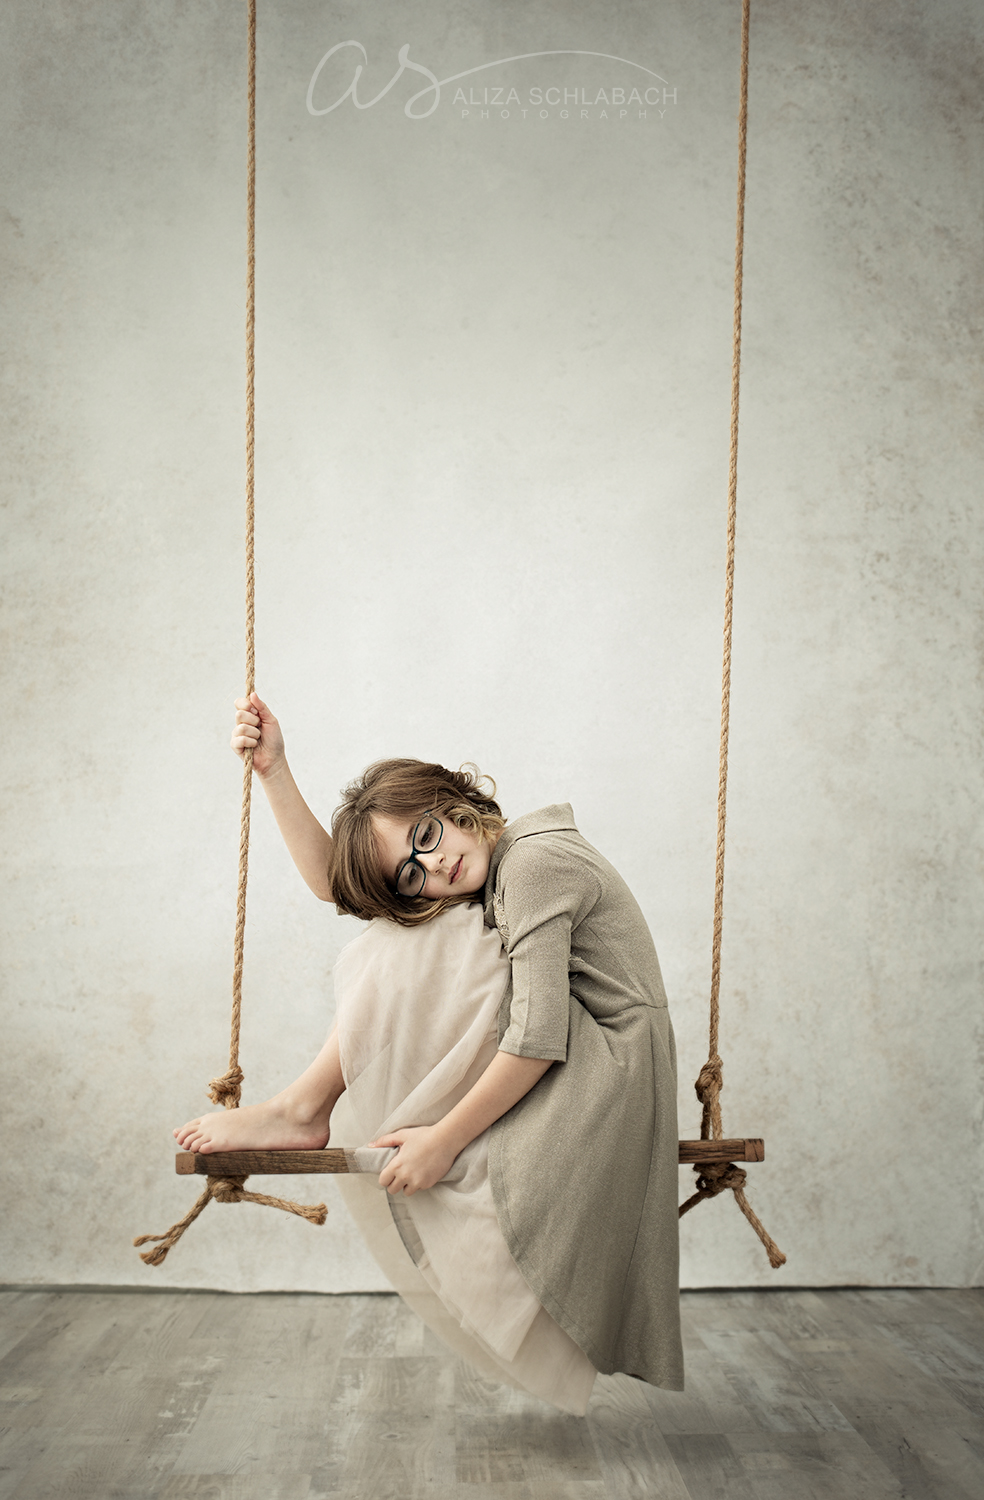 Fine art photo of a girl sitting sideways on a swing